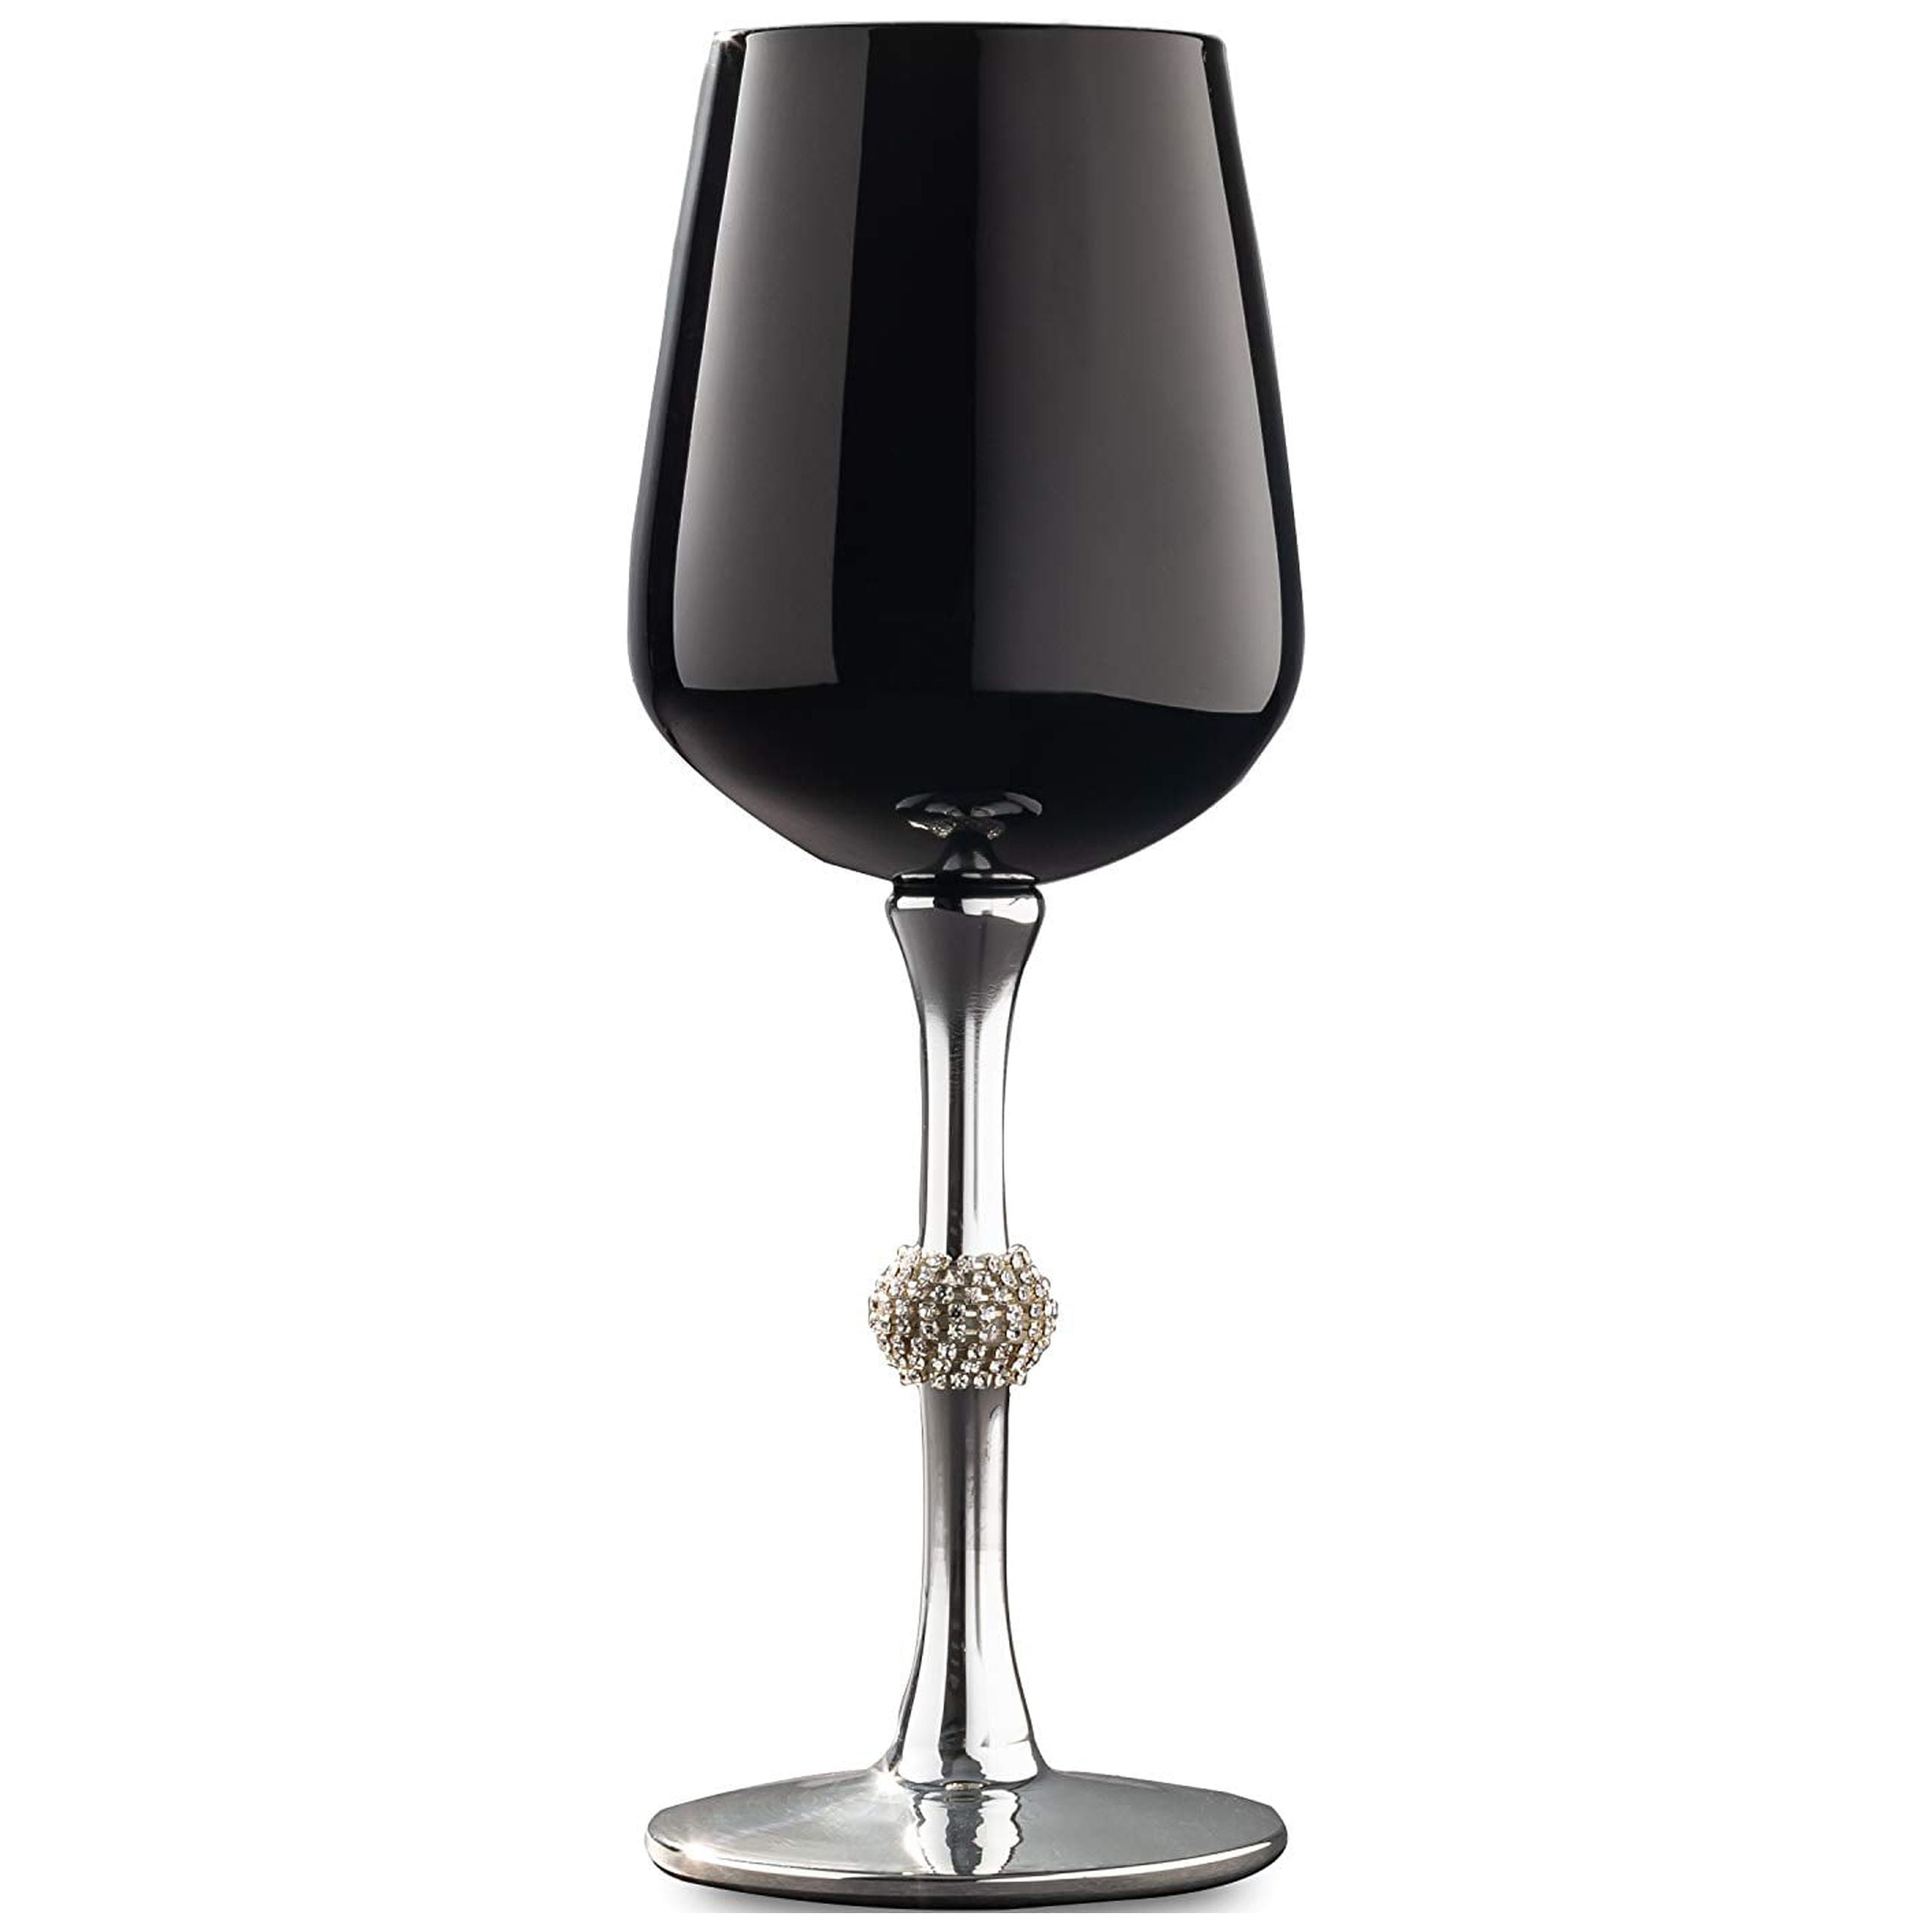 Vikko Stemless Wine Glass, 16 Ounce Wine Glasses Set of 6, White or Red  Wine Glass, Classic and Elegant Wine Glasses